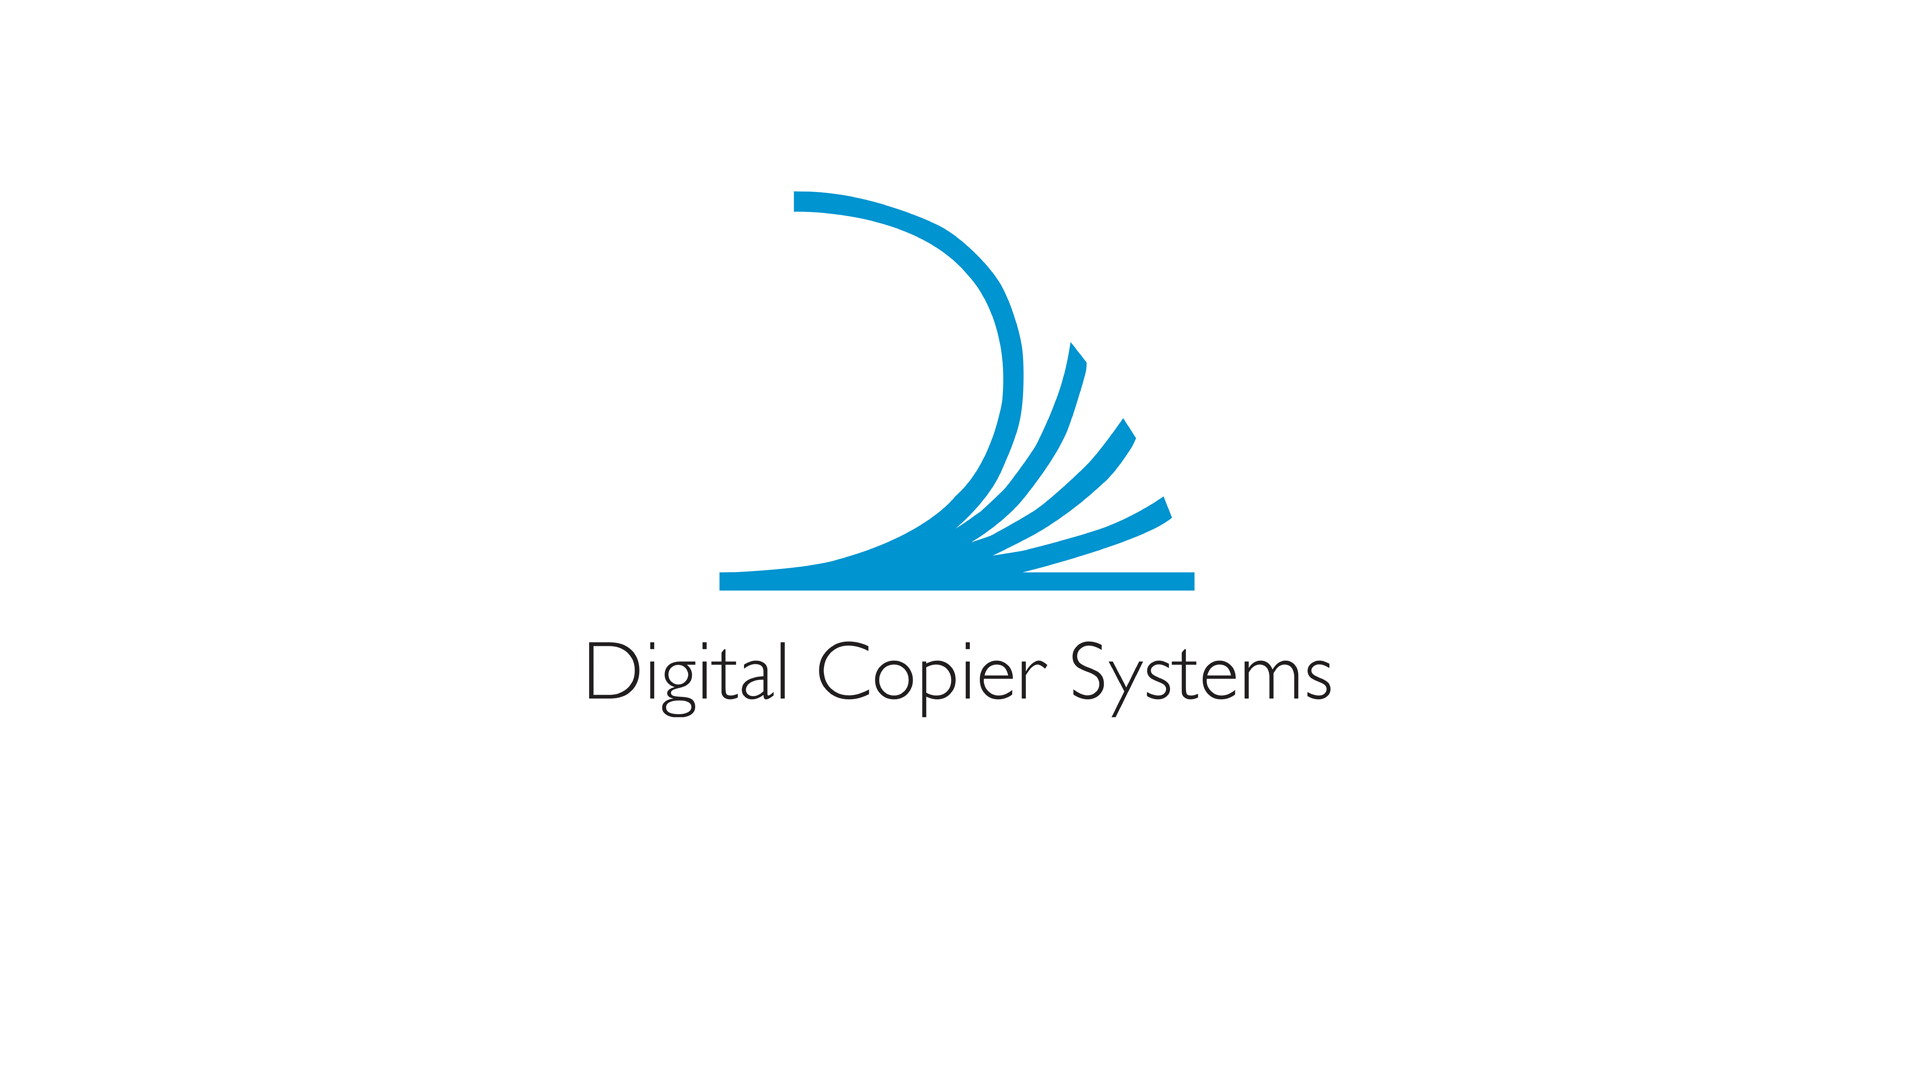 Photocopier Logo - Konica Minolta Partner East Anglia. Digital Copier Systems Services